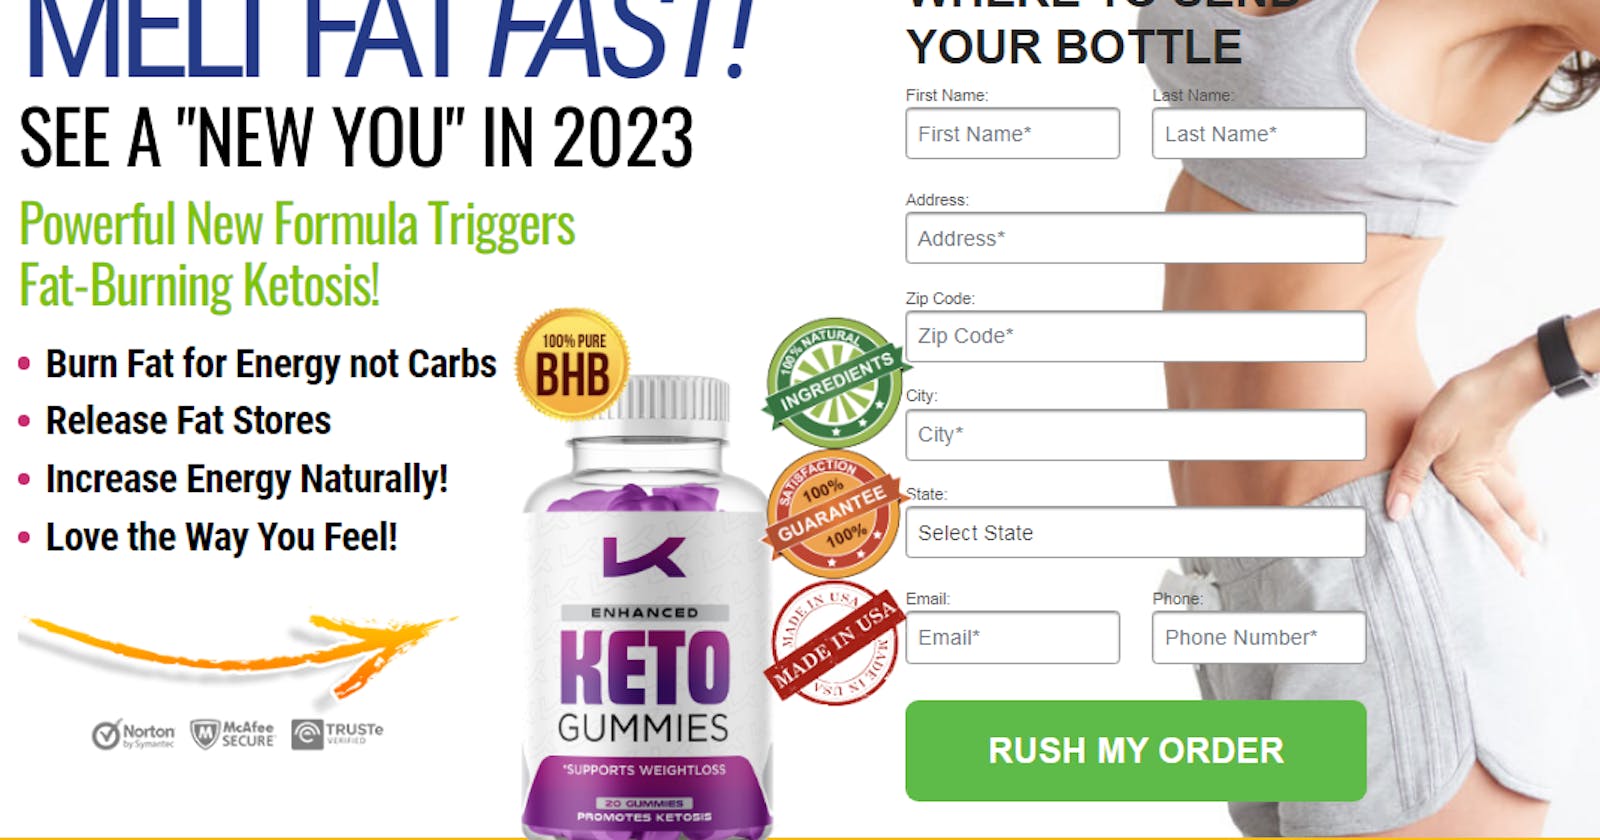 Enhanced Keto Gummies - Burn Fat & Speed Up Metabolism with Ketosis?